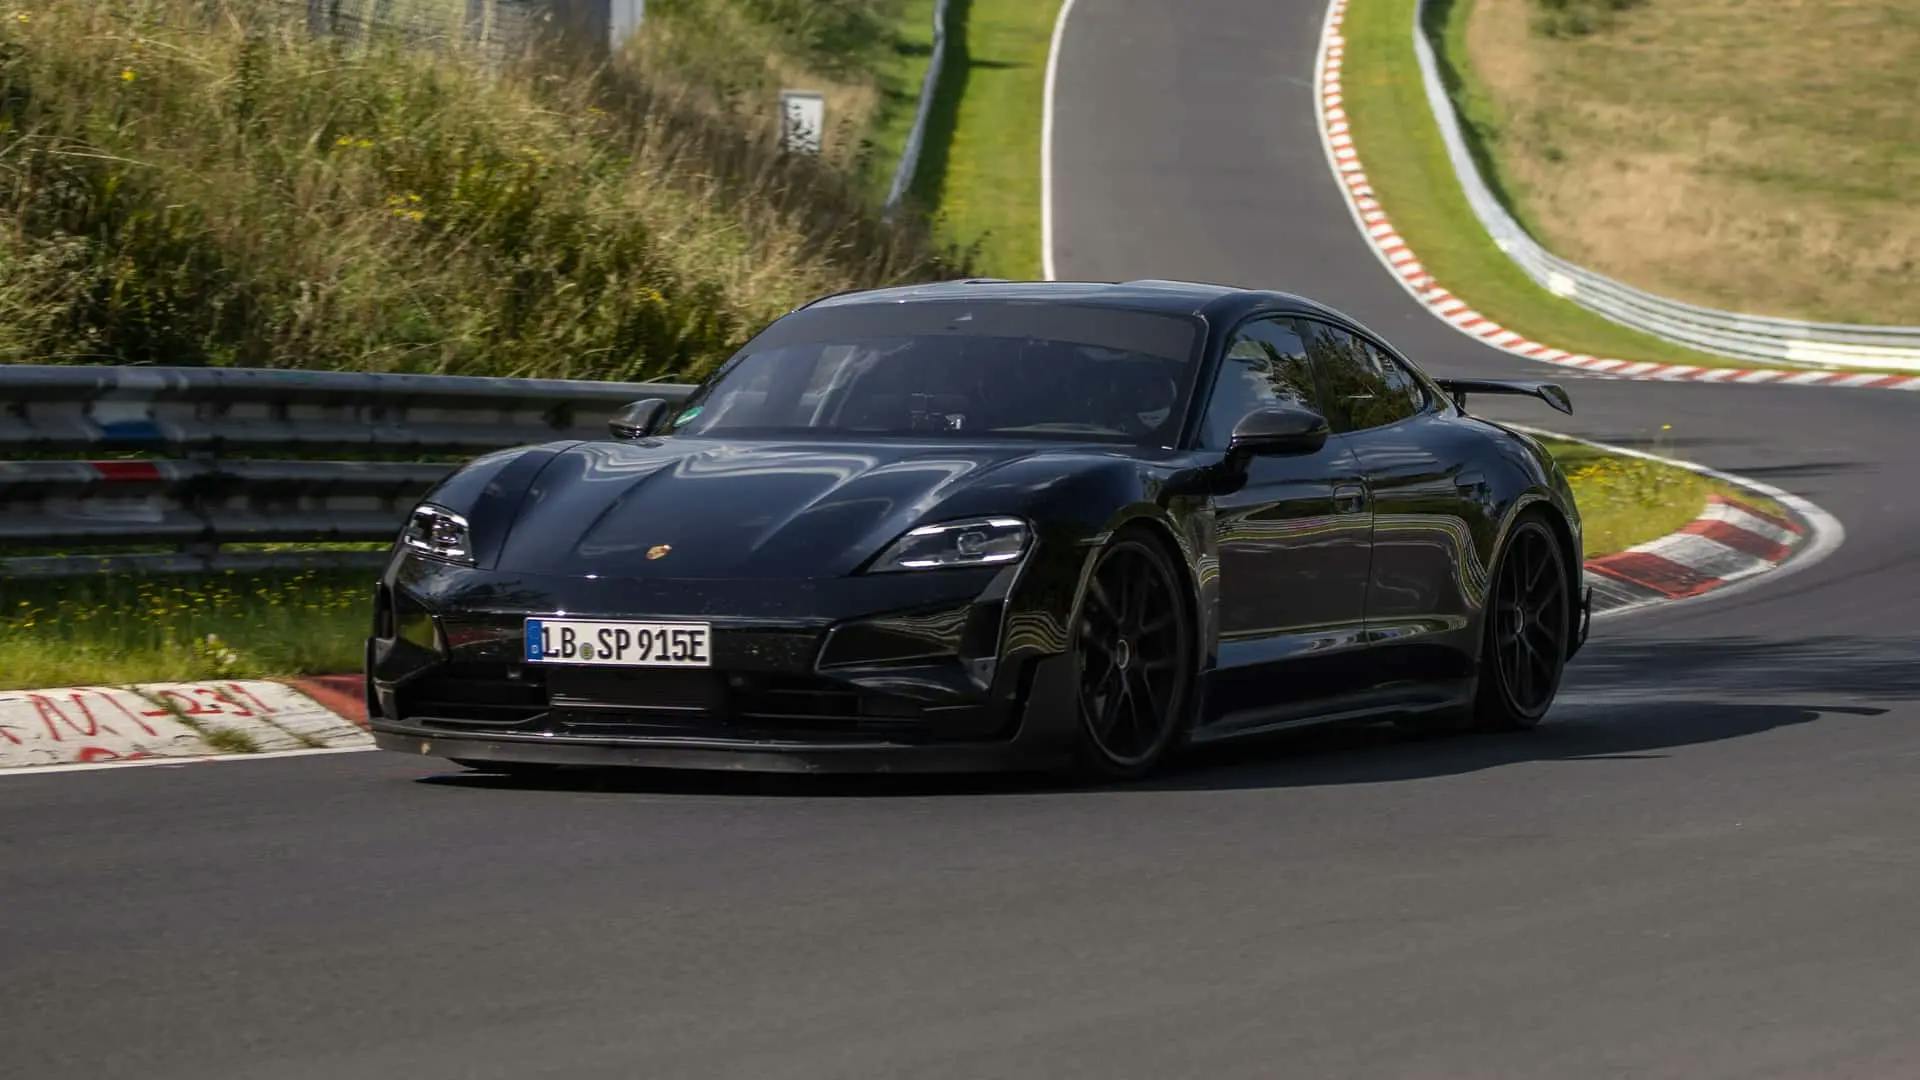 Noul Porsche Taycan zdrobește recordul Tesla Model S Plaid cu un timp de 7:07 pe Nurburgring